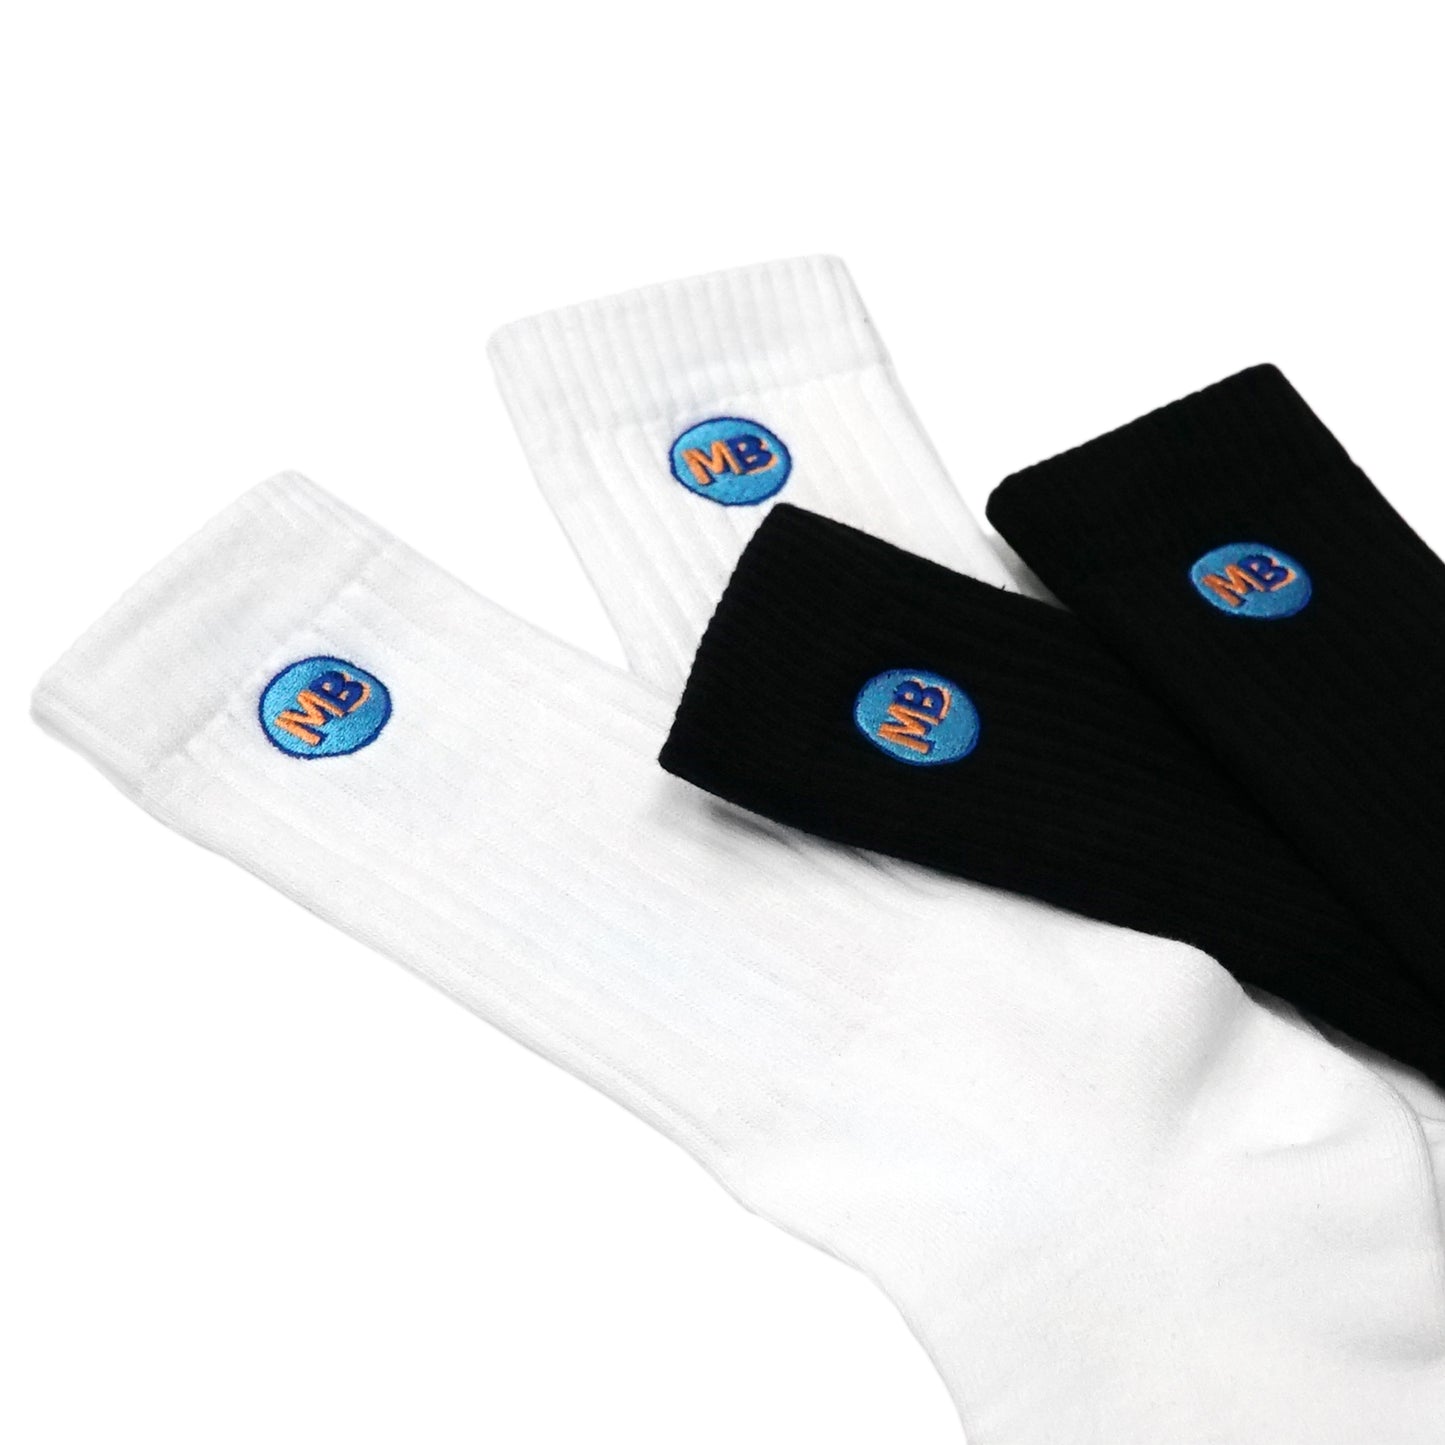 MOTO-BUNKA - MB Circle Logo Socks/Black